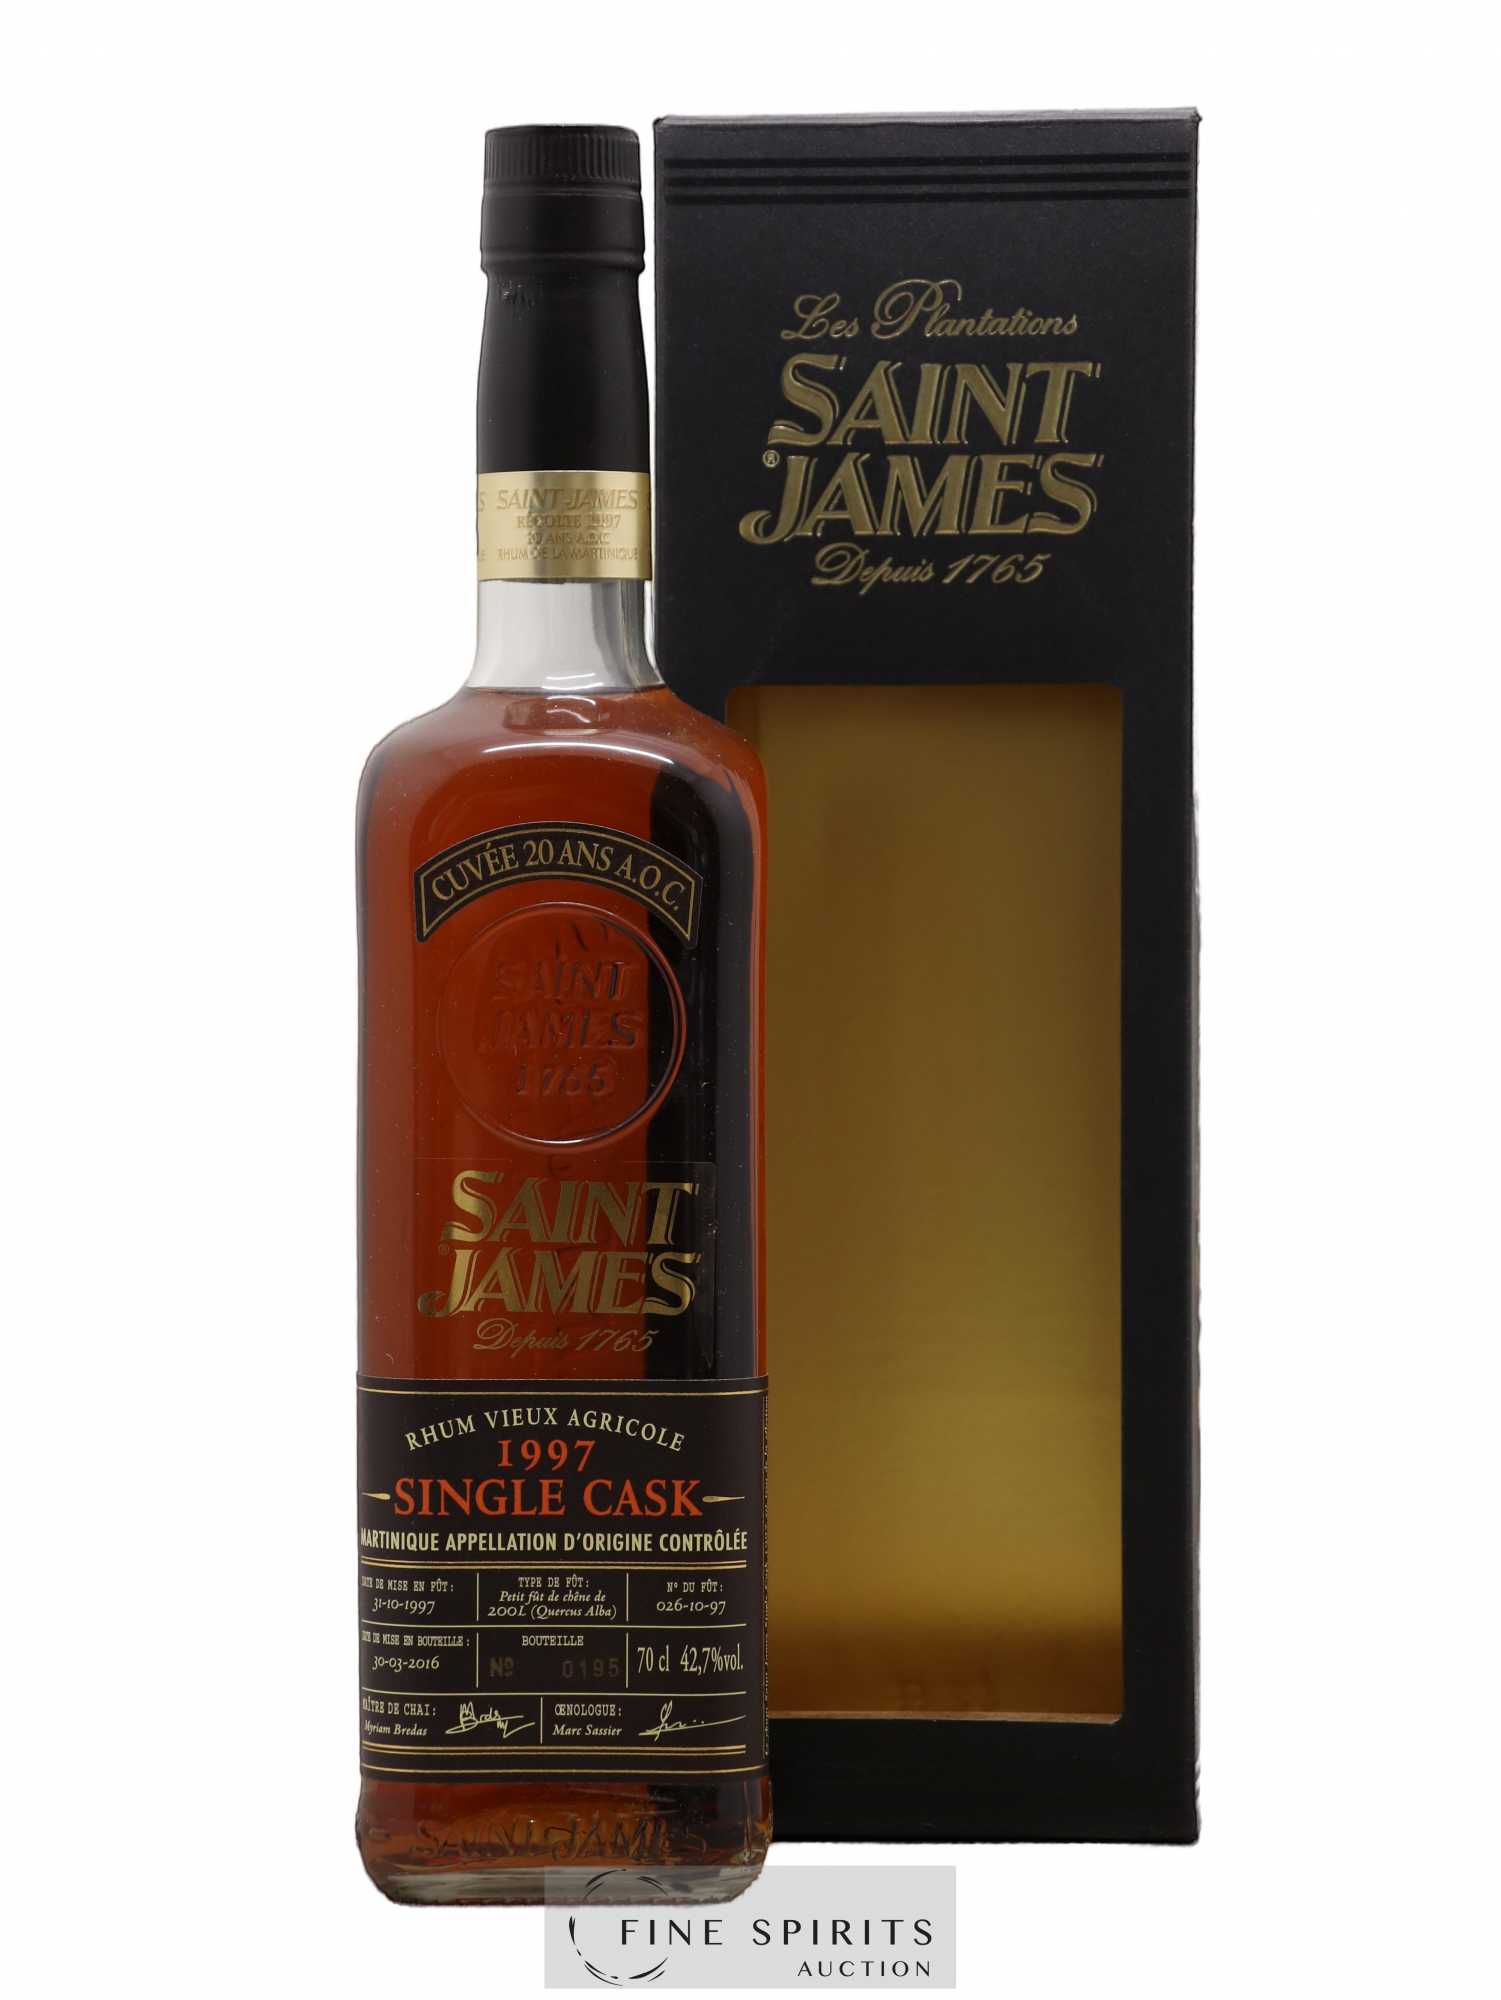 Saint James 20 years 1997 Of. Single Cask n°026-10-97 - bottled 2016